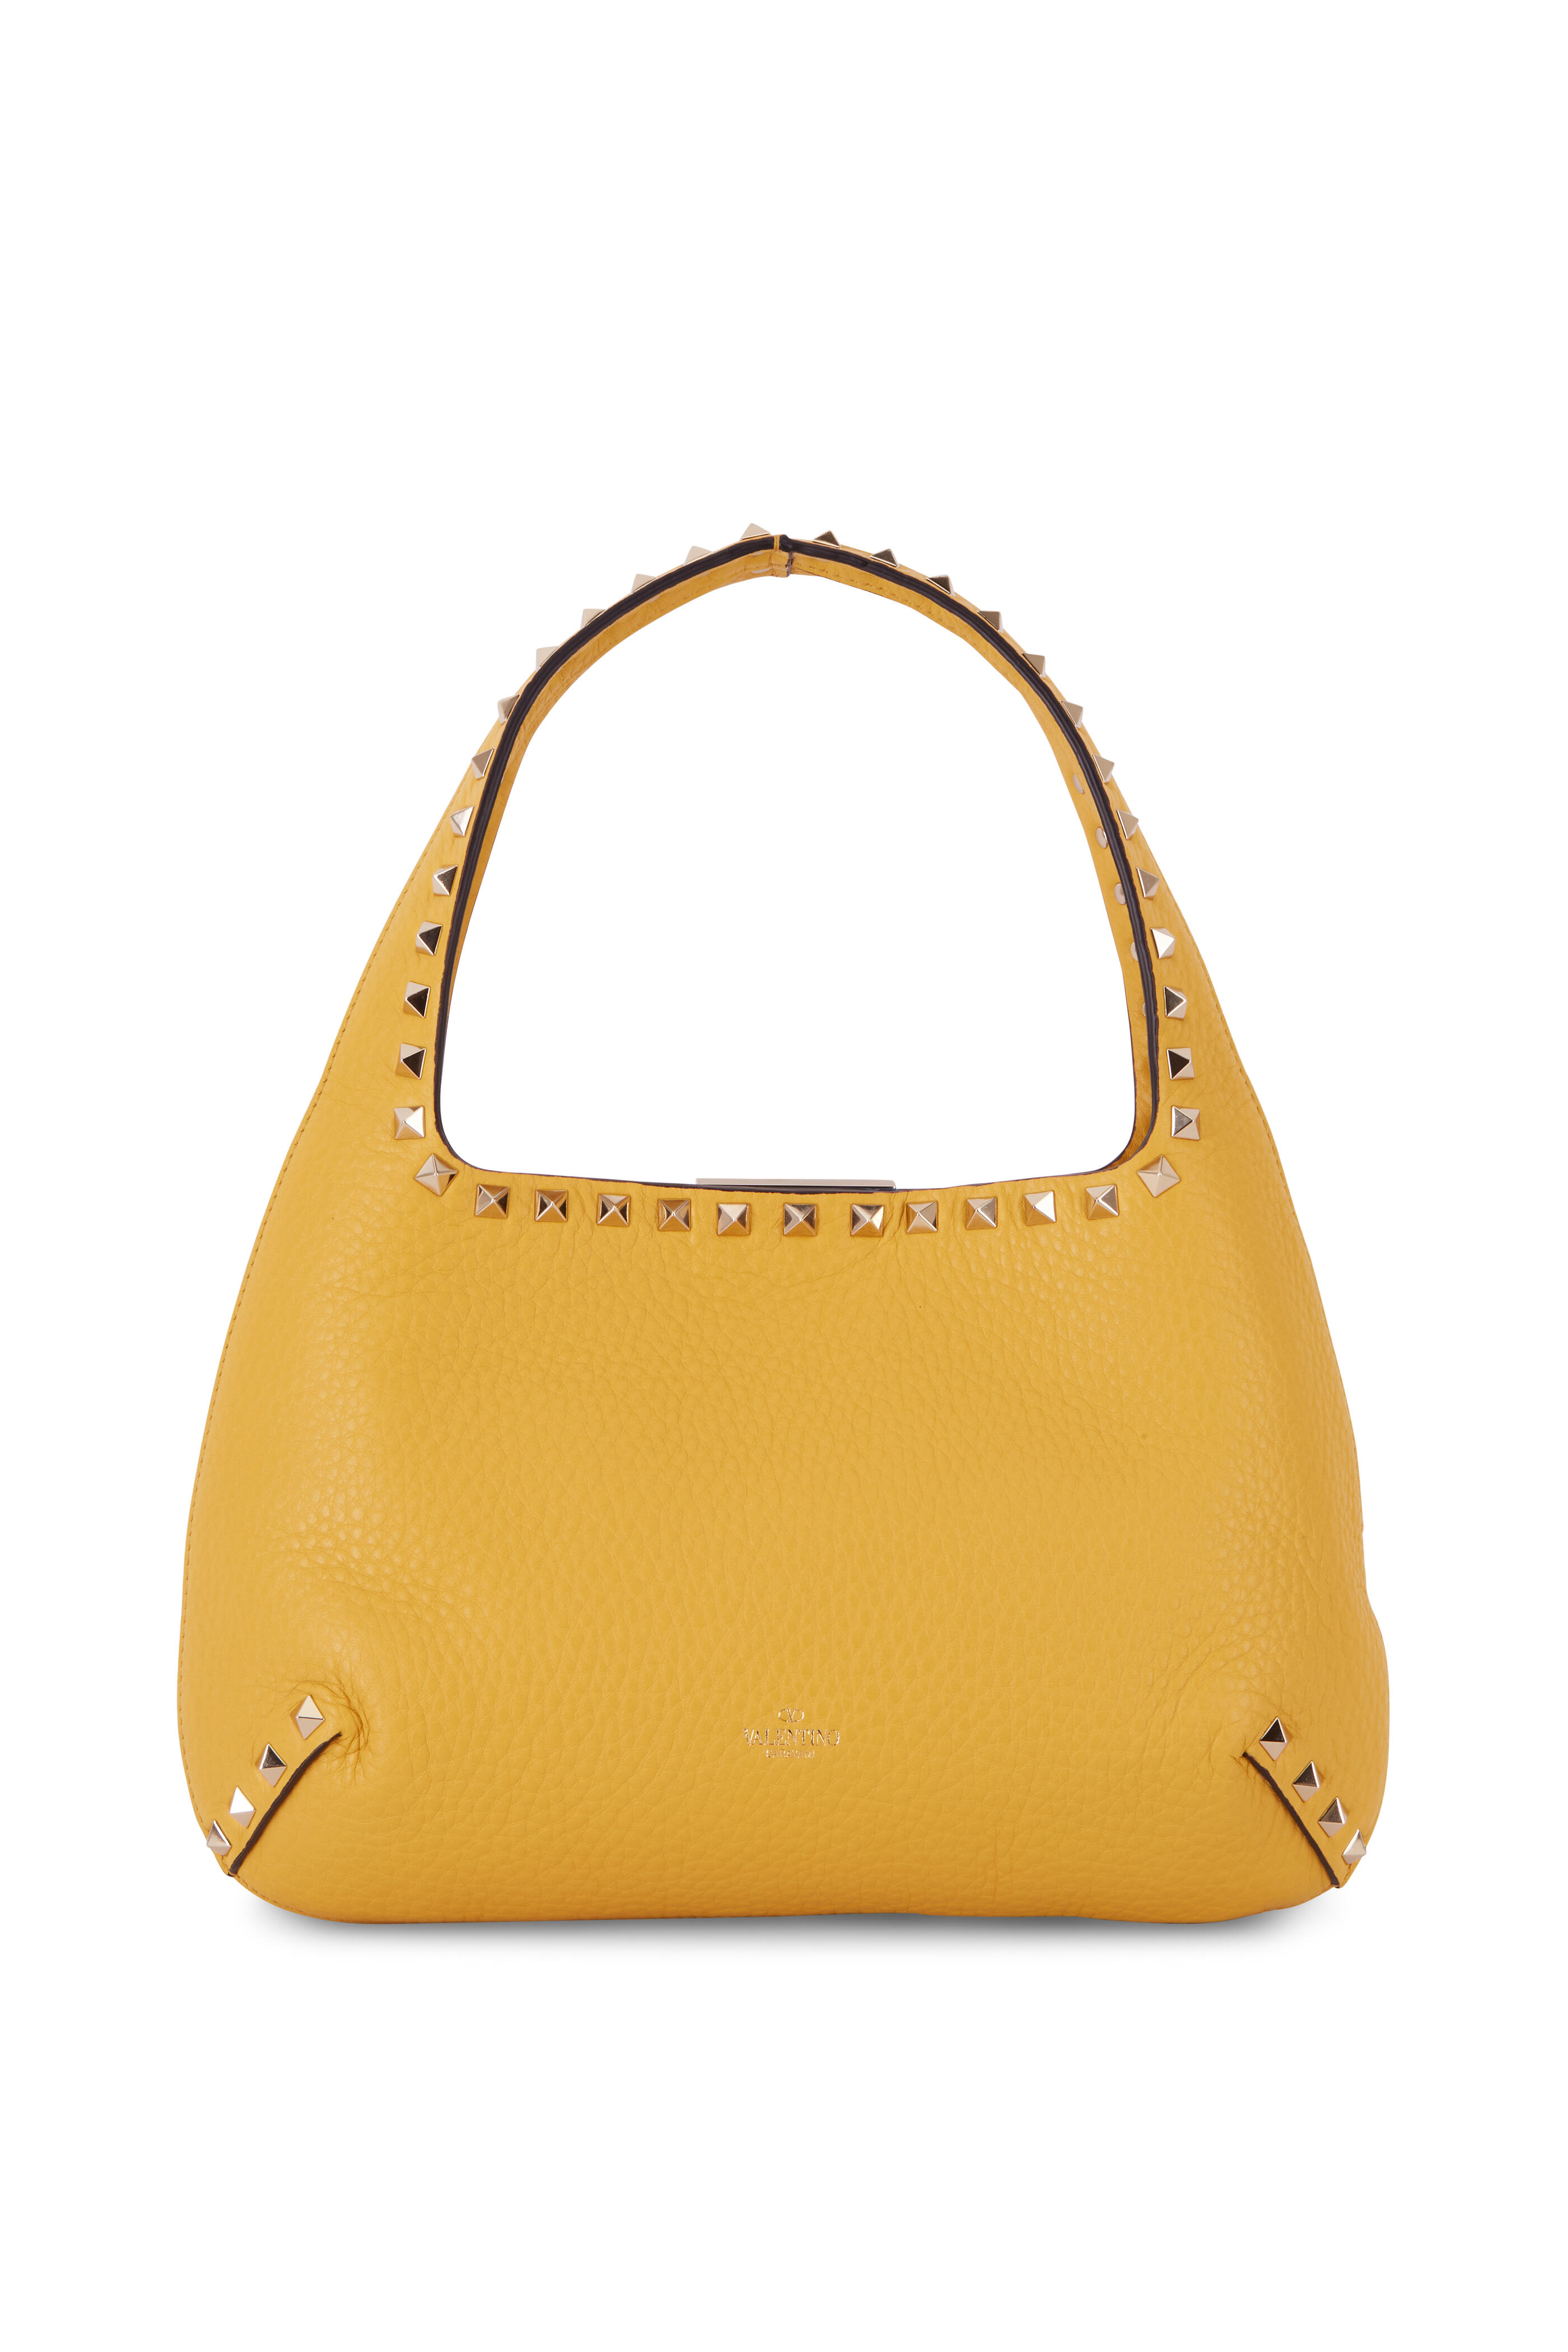 Valentino - Rockstud Golden Yellow Small Hobo Bag